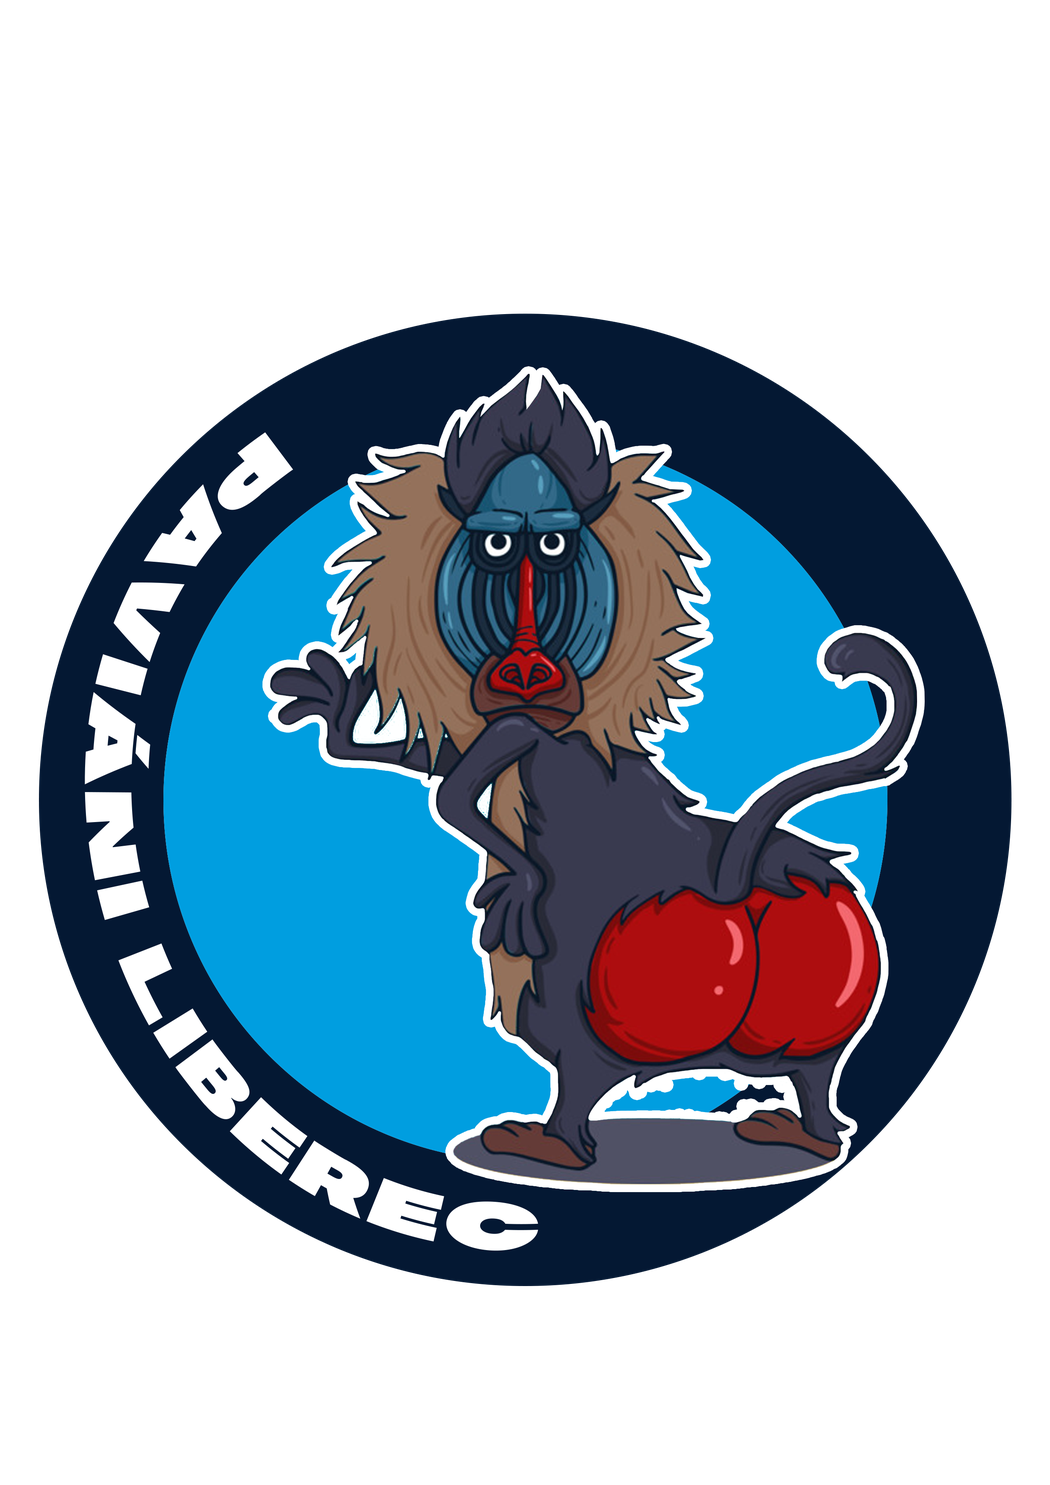 Nové logo libereckého hokejového klubu - HC Paviáni Liberec